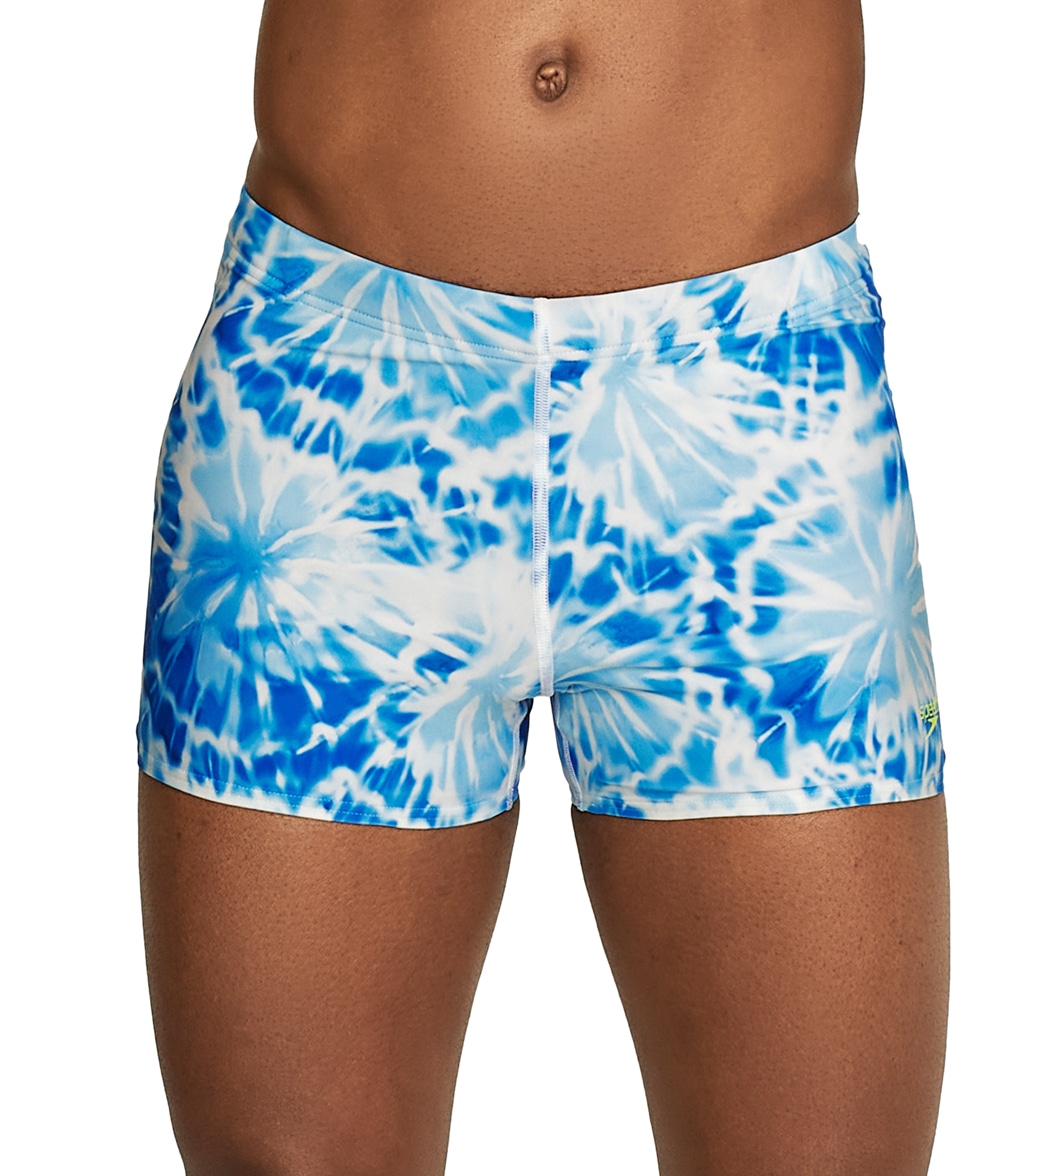 Speedo Men's Printed Square Leg Swimsuit - White/Blue Large - Swimoutlet.com